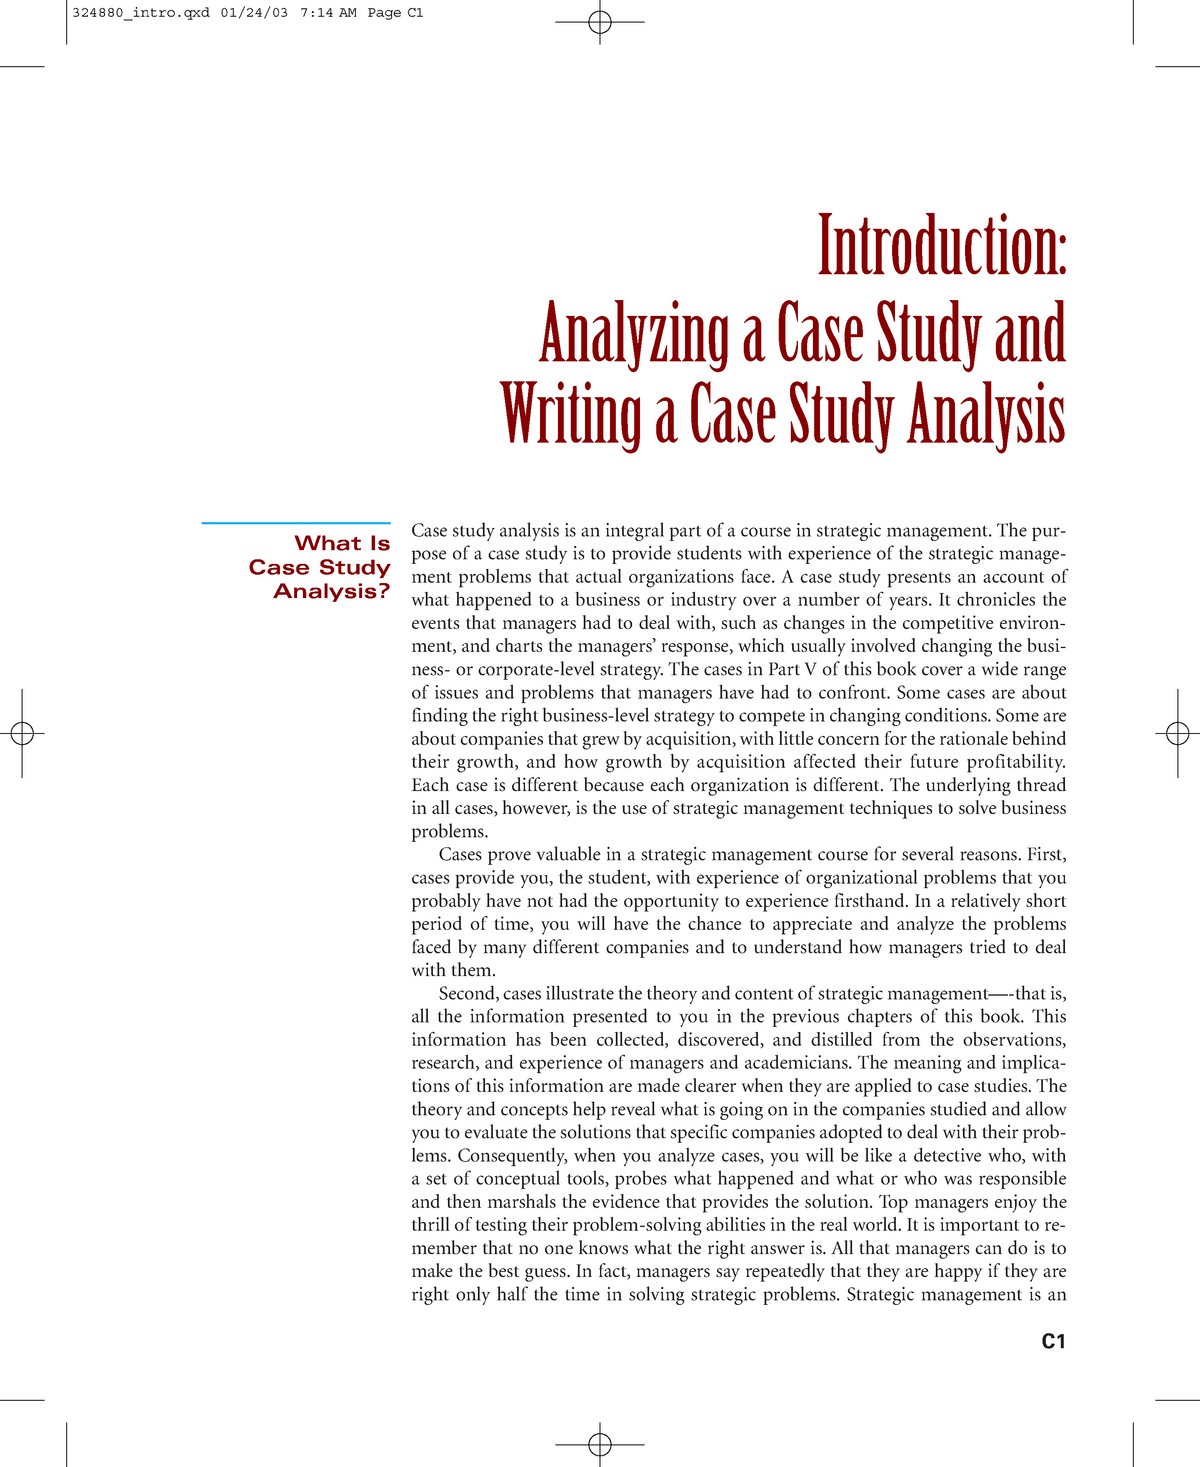 case study analysis techniques